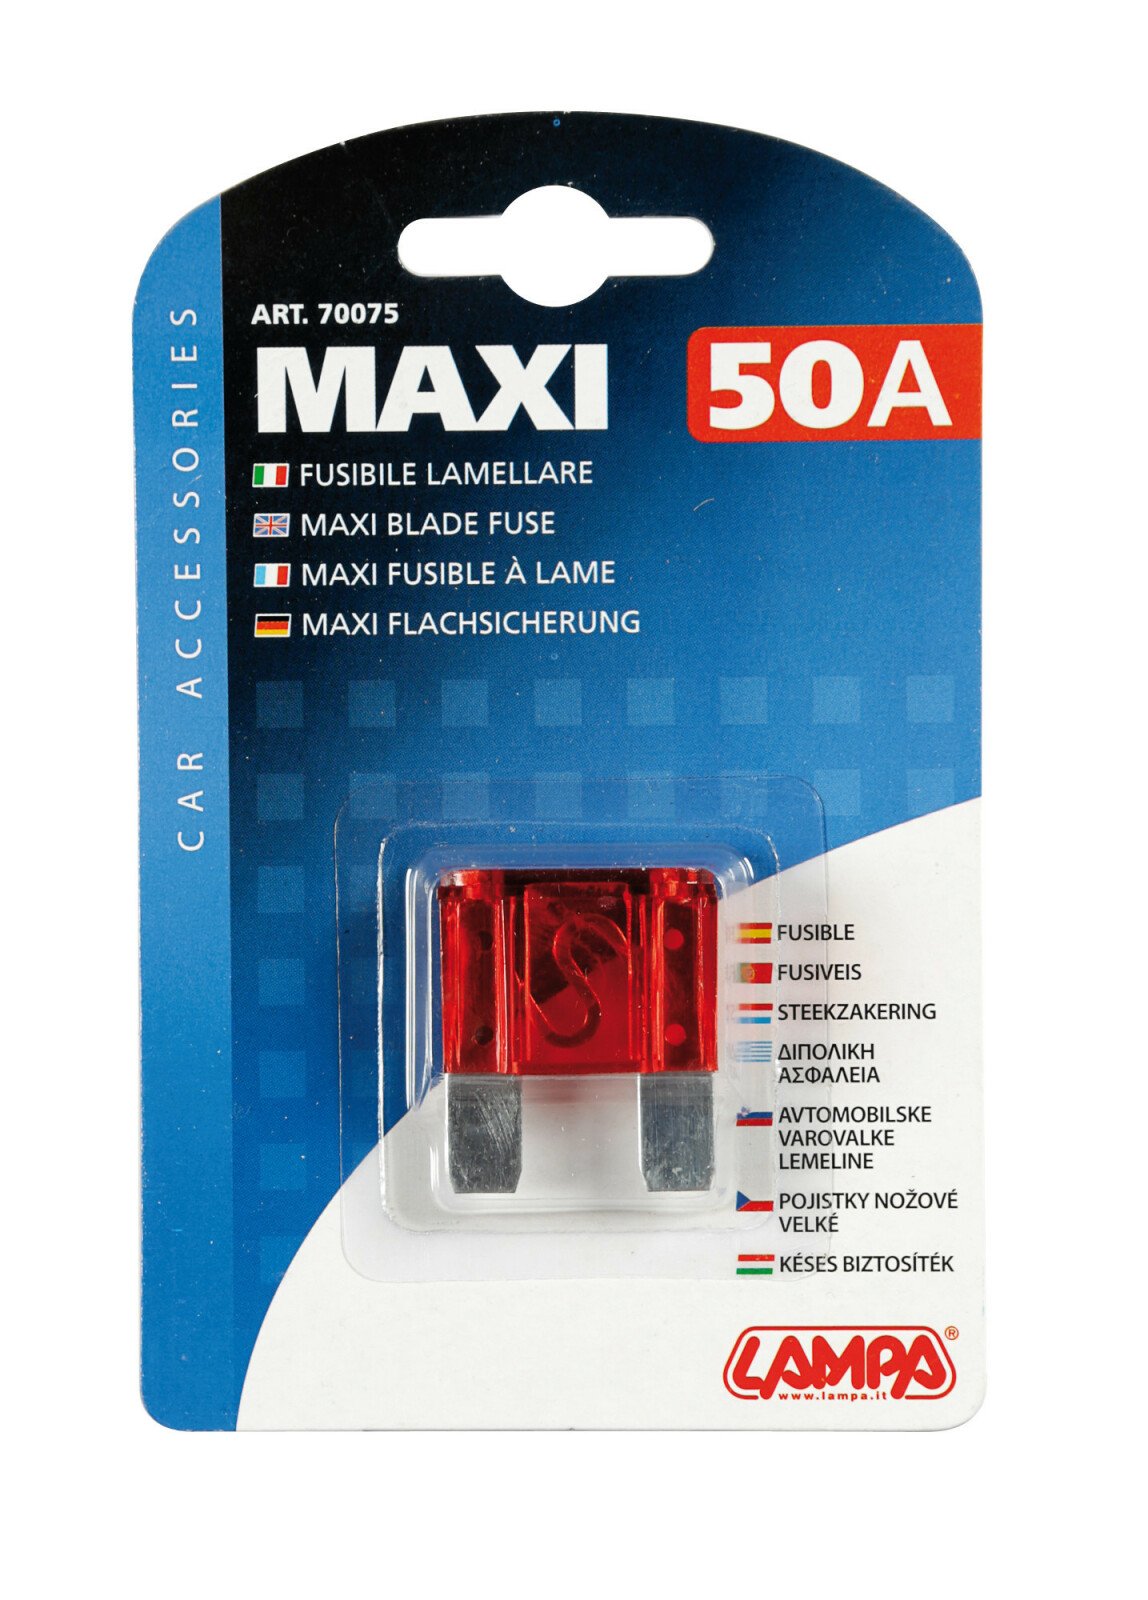 Maxi Blade fuse - 50A thumb